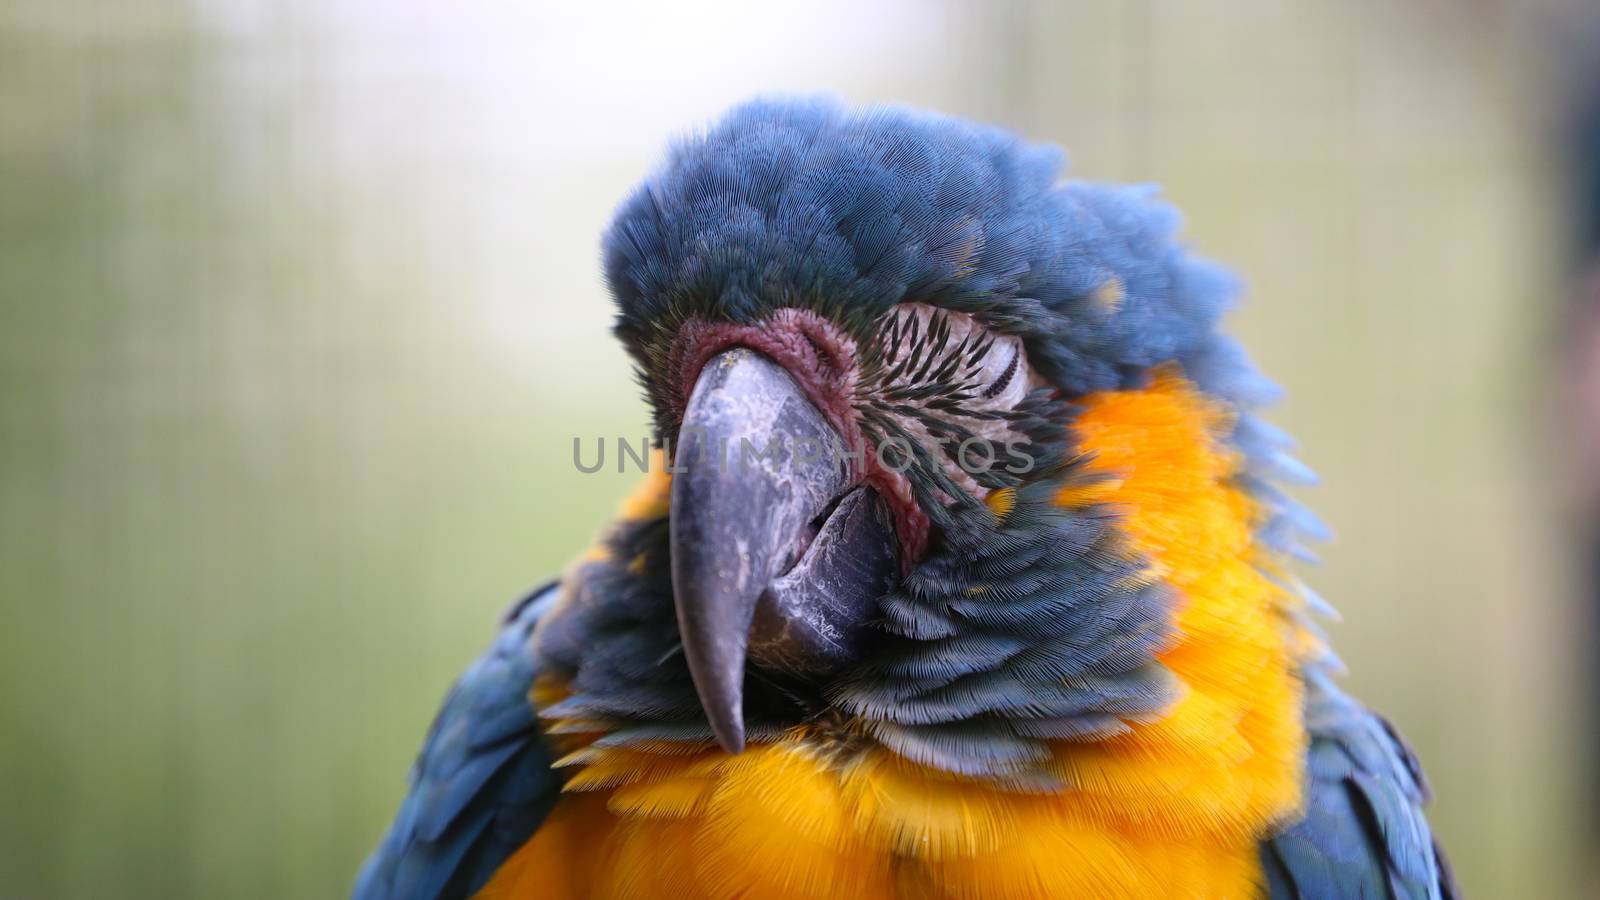 Sleeping Parrot by bensib